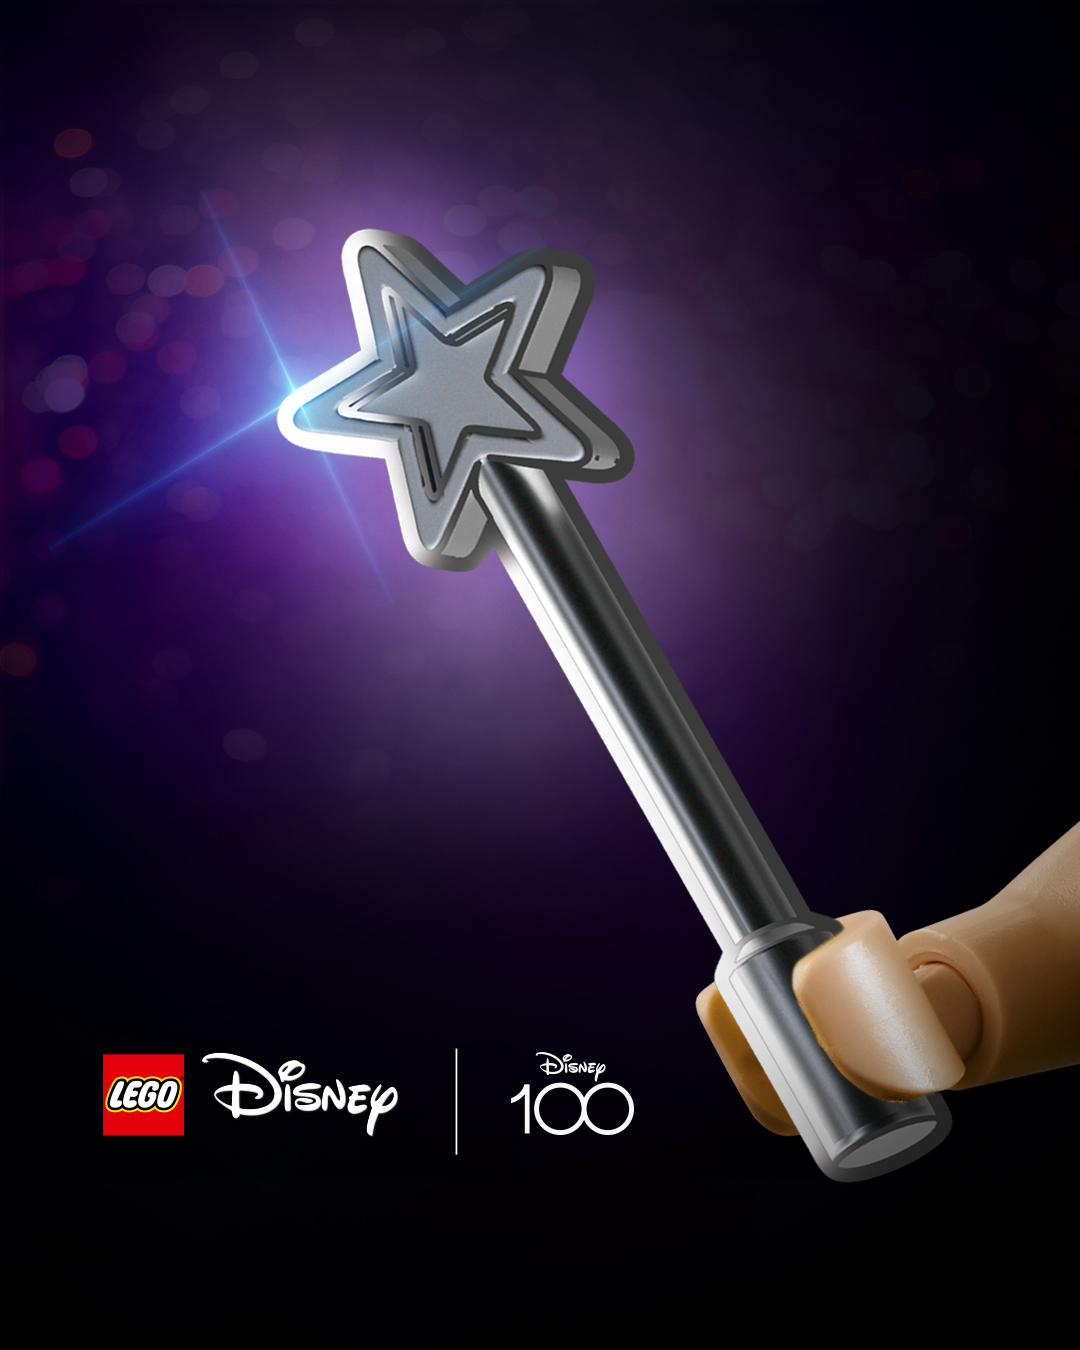 LEGO Disney Duos Set, Disney's 100th Anniversary